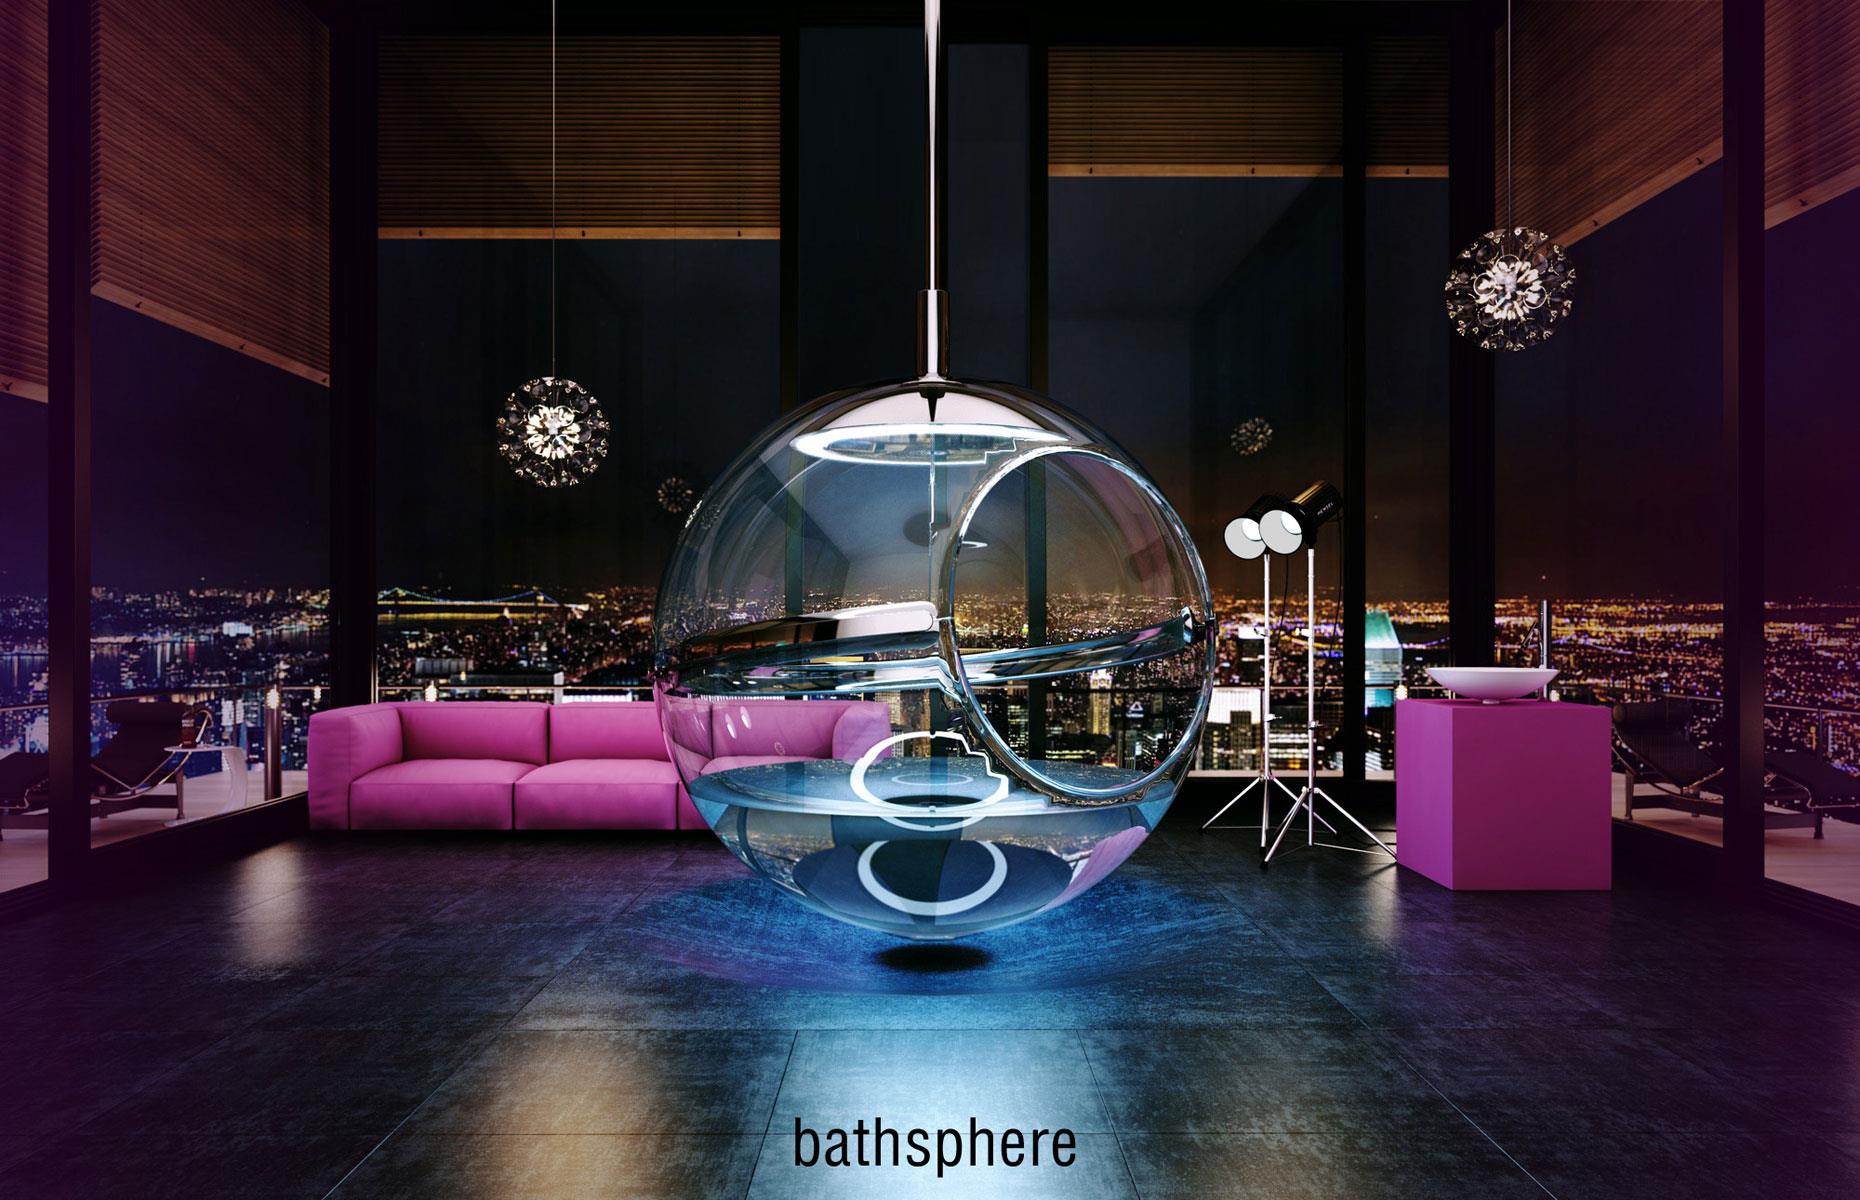 Bathsphere by the Alexander Zhukovsky Design Studio